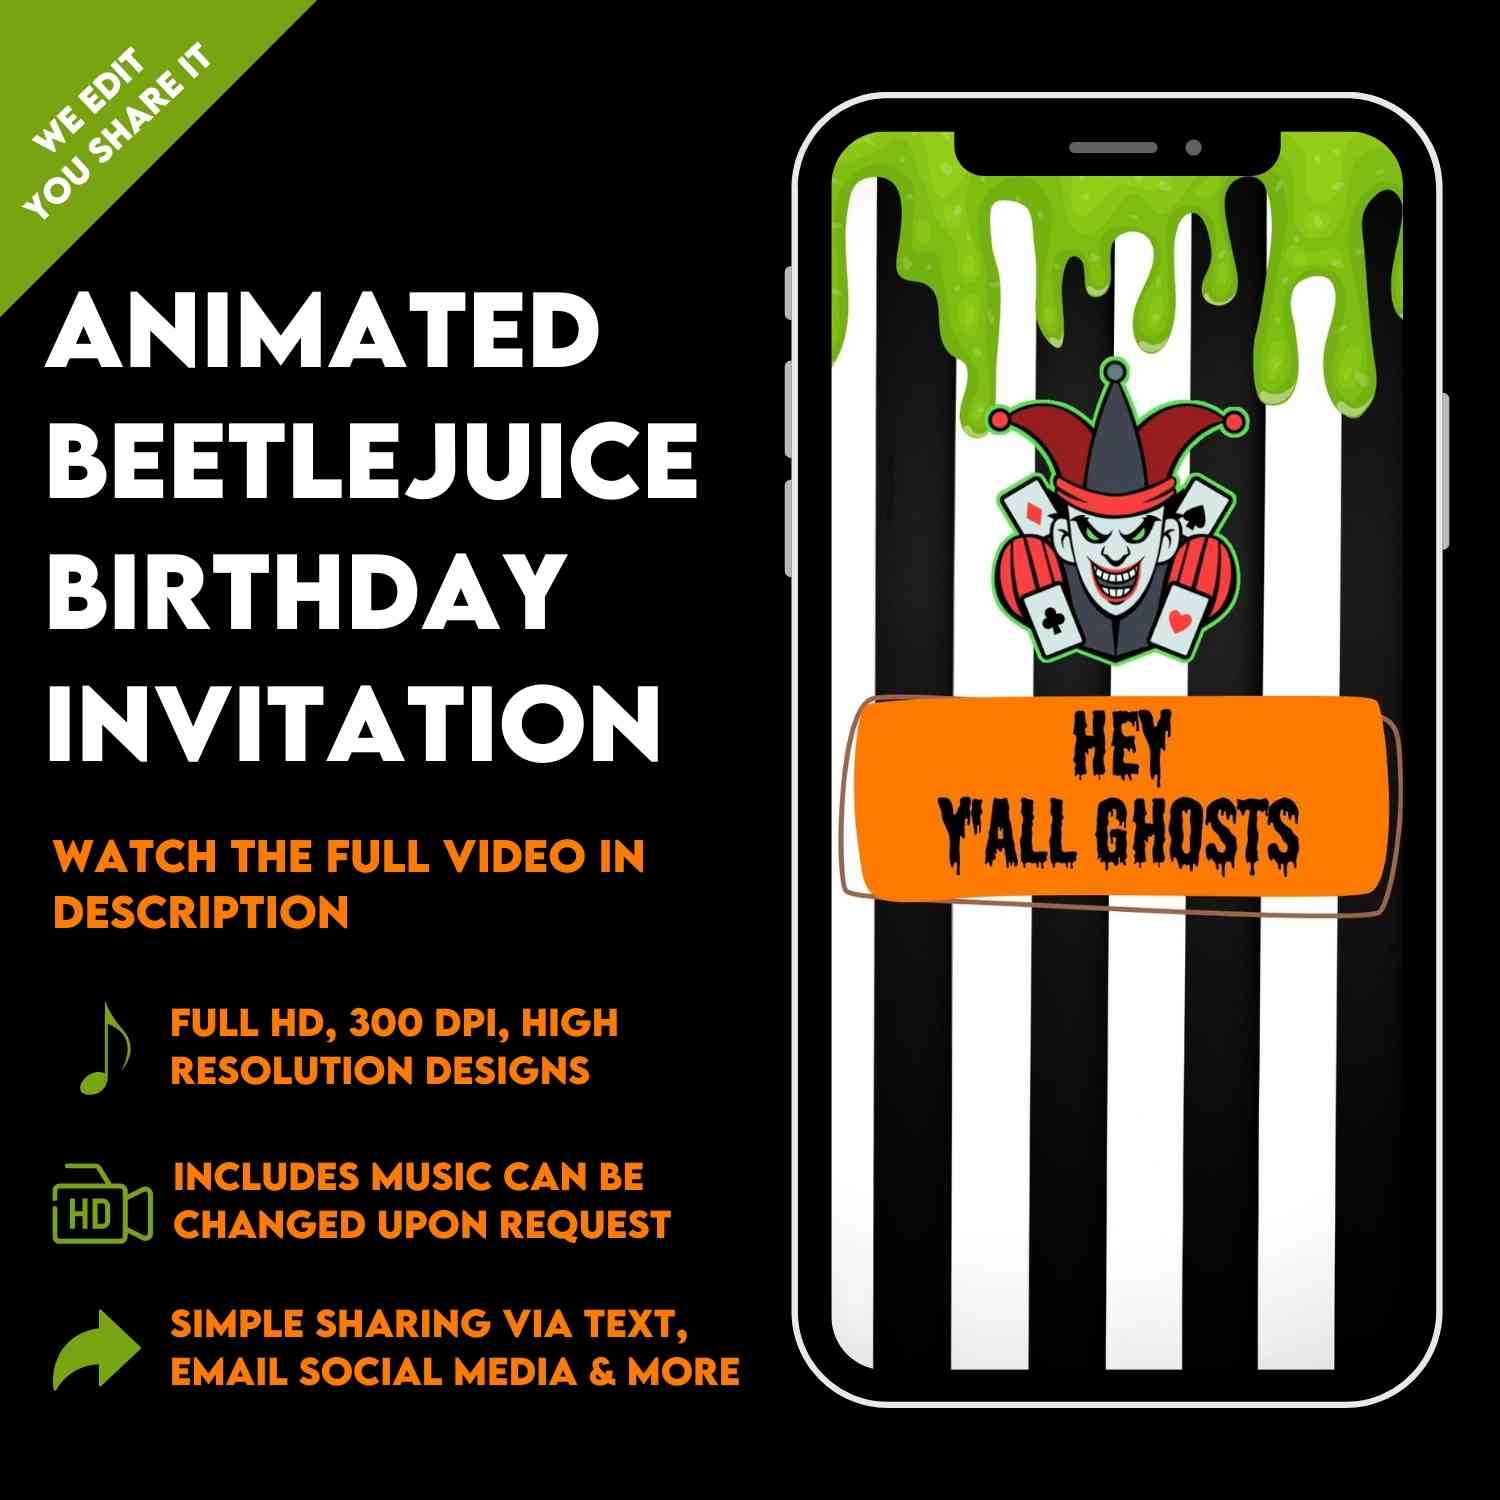 Animated Beetlejuice Birthday Party Invitation - Halloween Video Party Invite